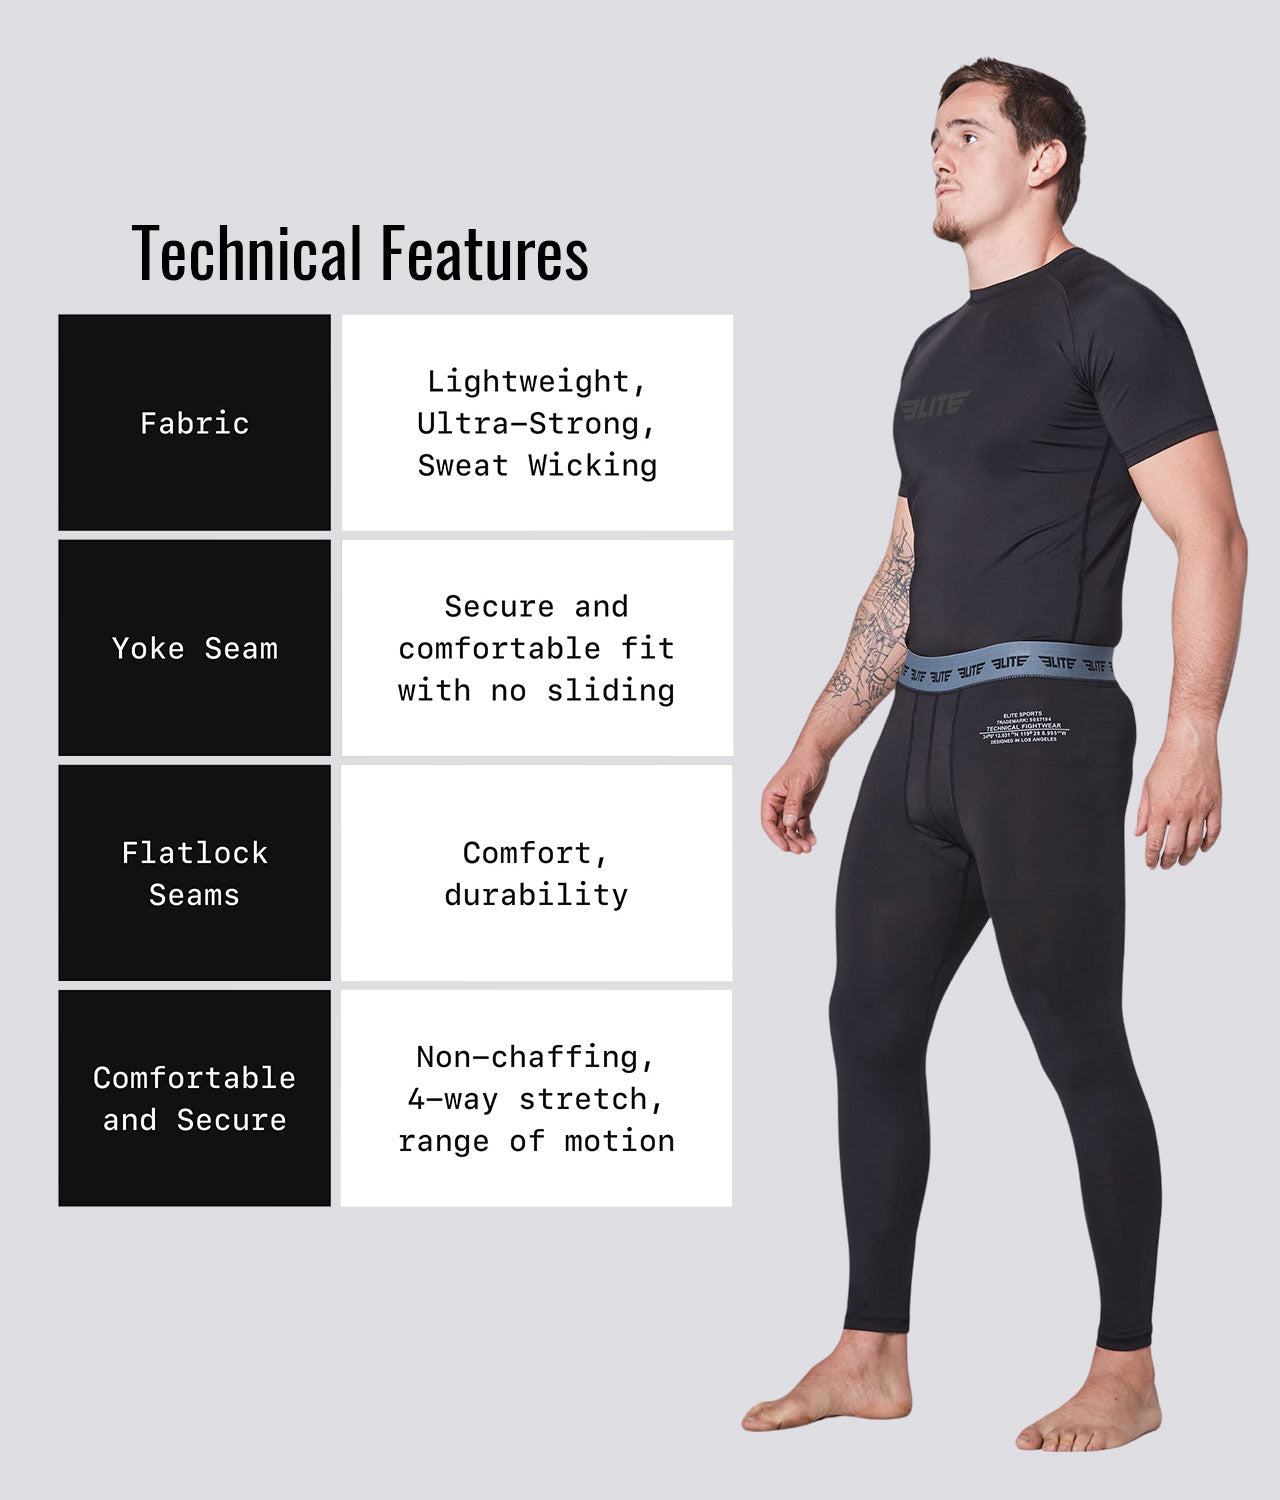 Elite Sports Men's Plain Black Compression Jiu Jitsu BJJ Spat Pants Technical Feature